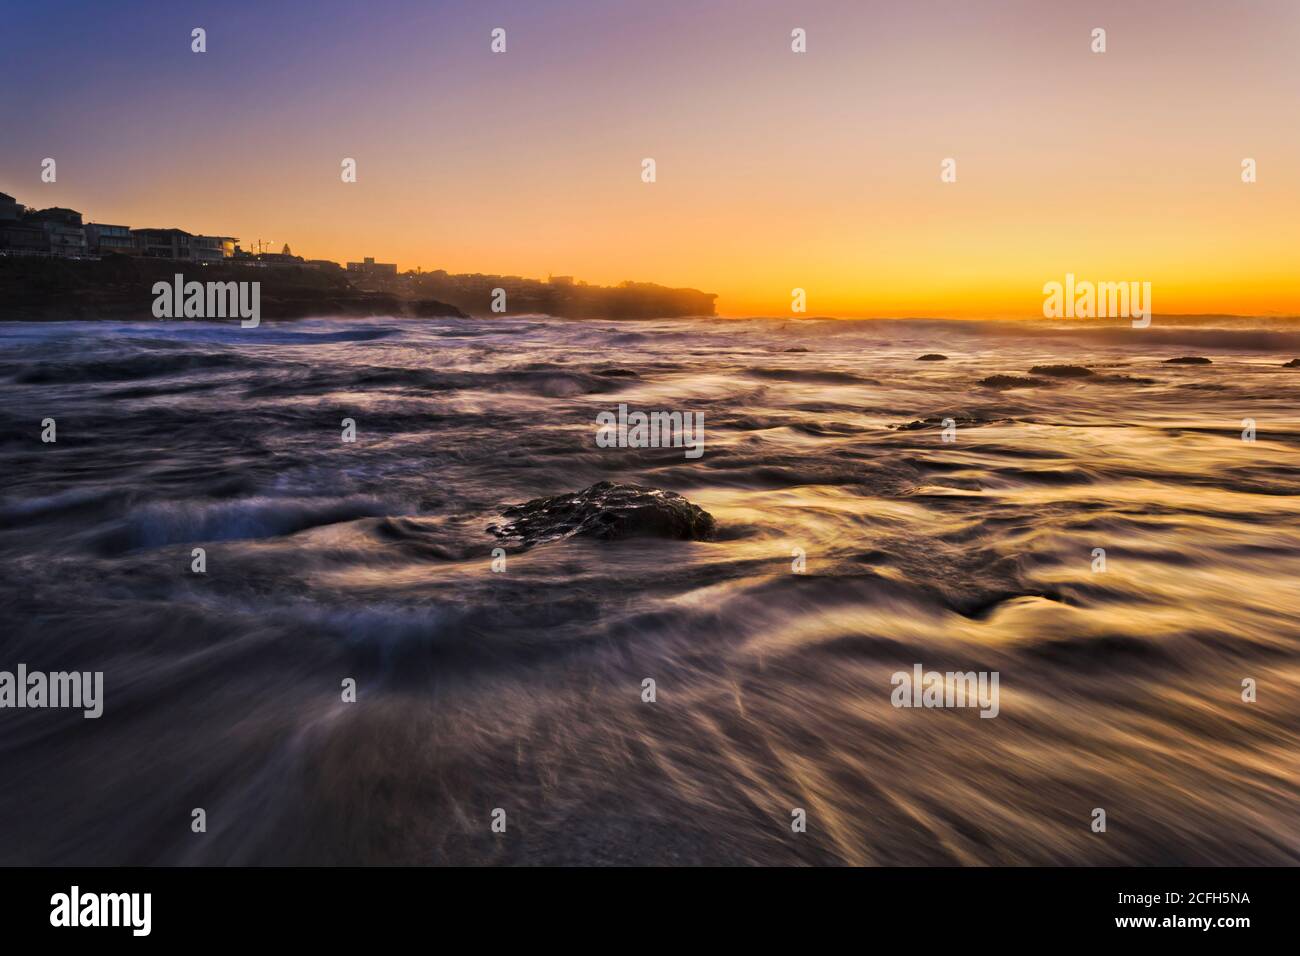 Hot orange sunrise over Pacific ocean horizon at Bronte beach of Sydney eastern suburbs. Stock Photo